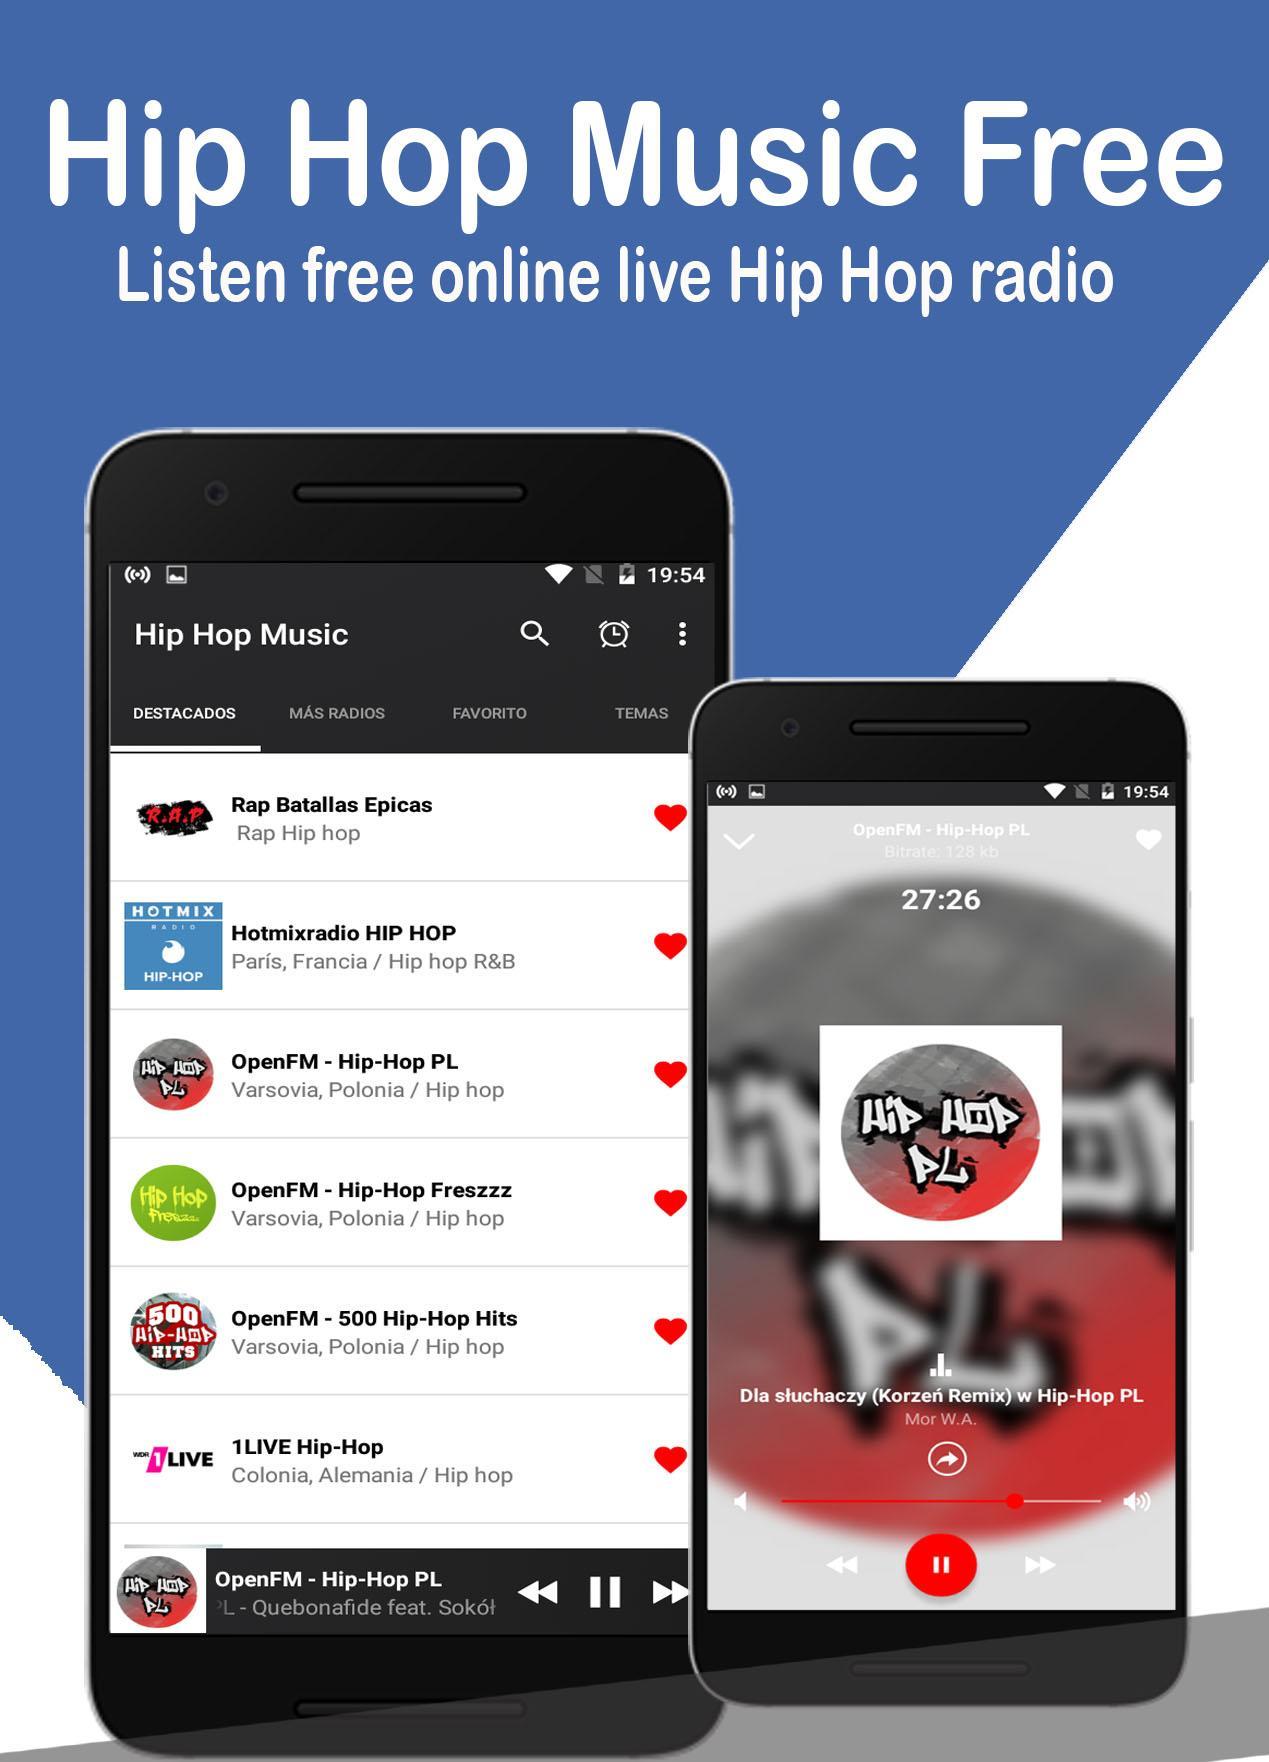 Musica Hip Hop Gratis for Android - APK Download